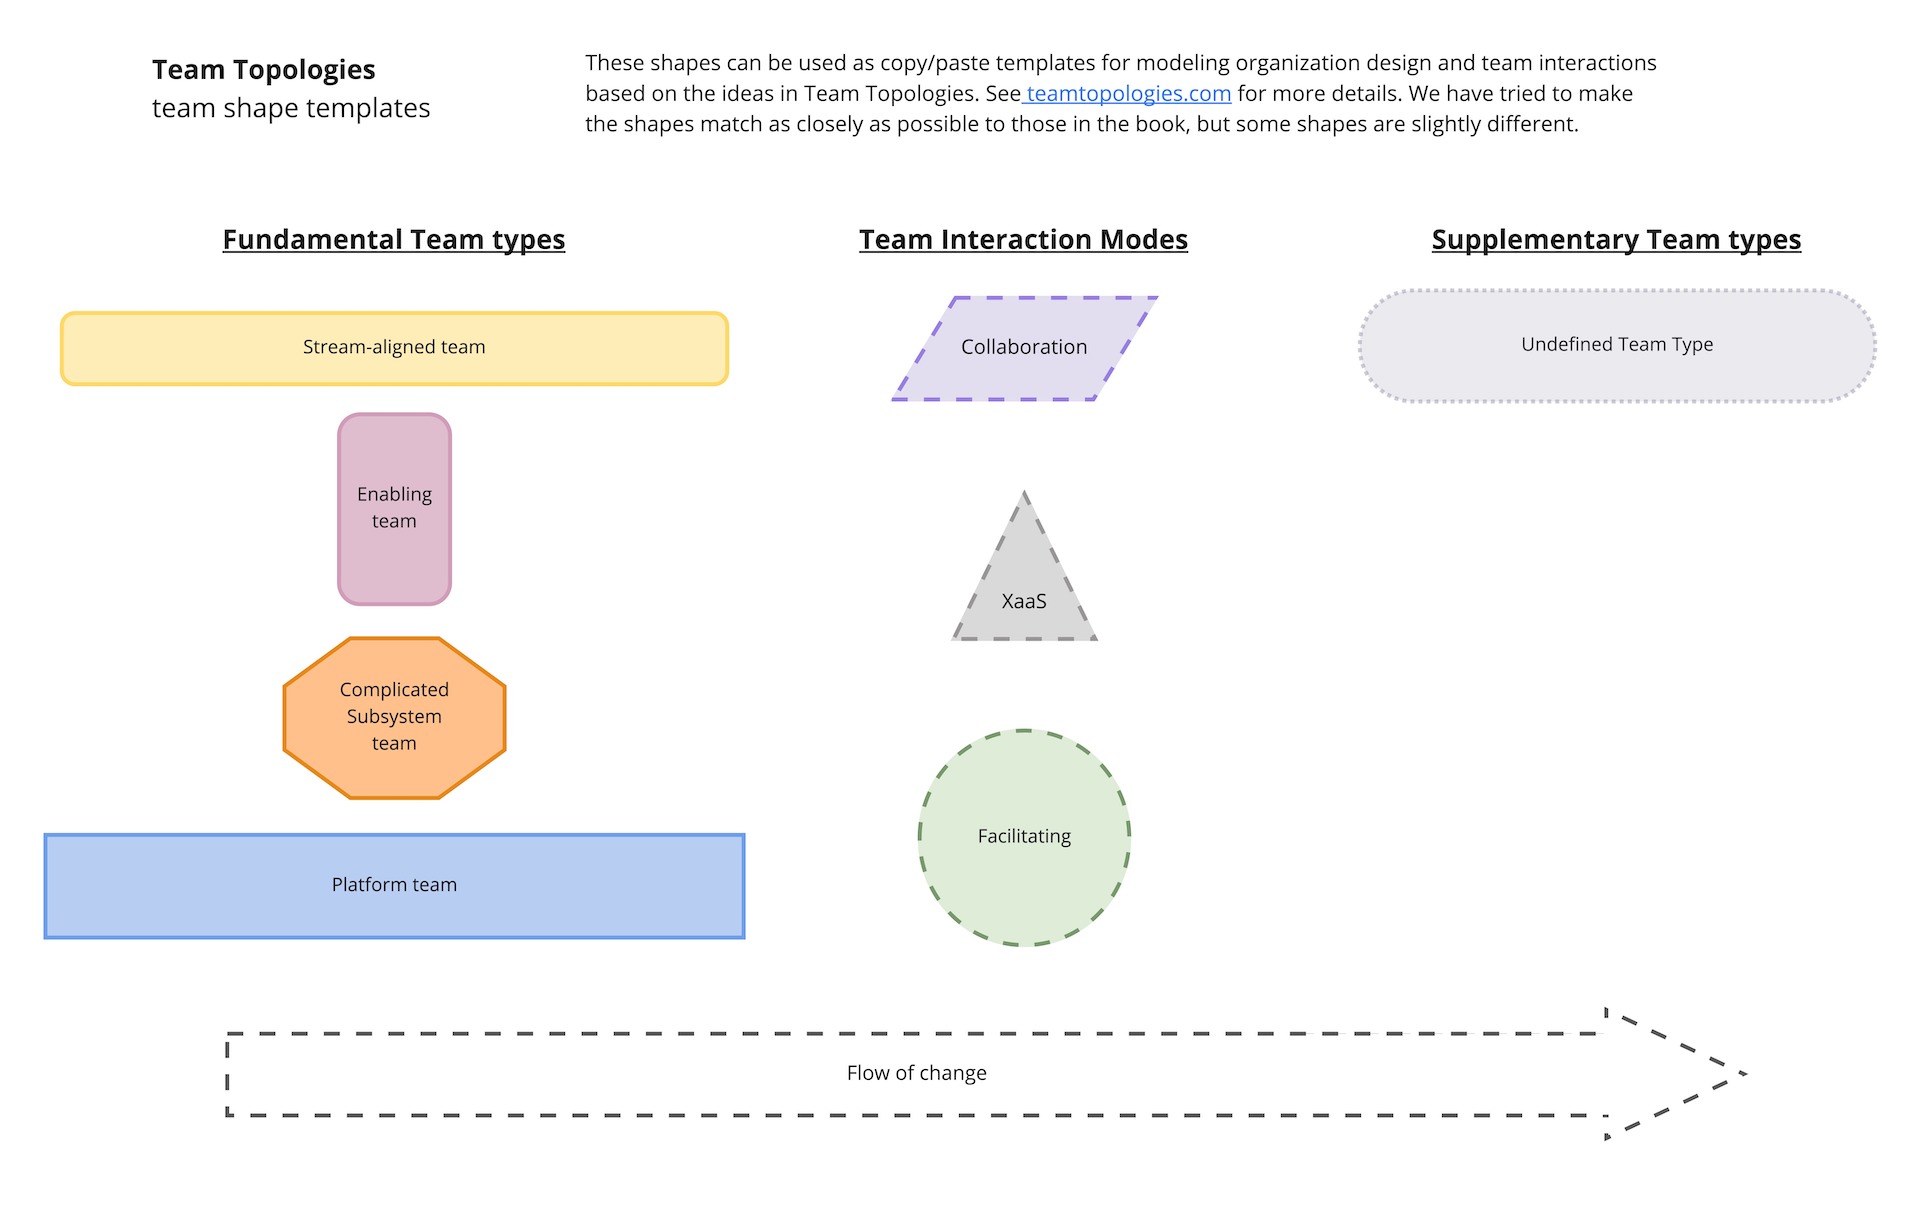 Screenshot of Team Topologies shape library in diagrams.net